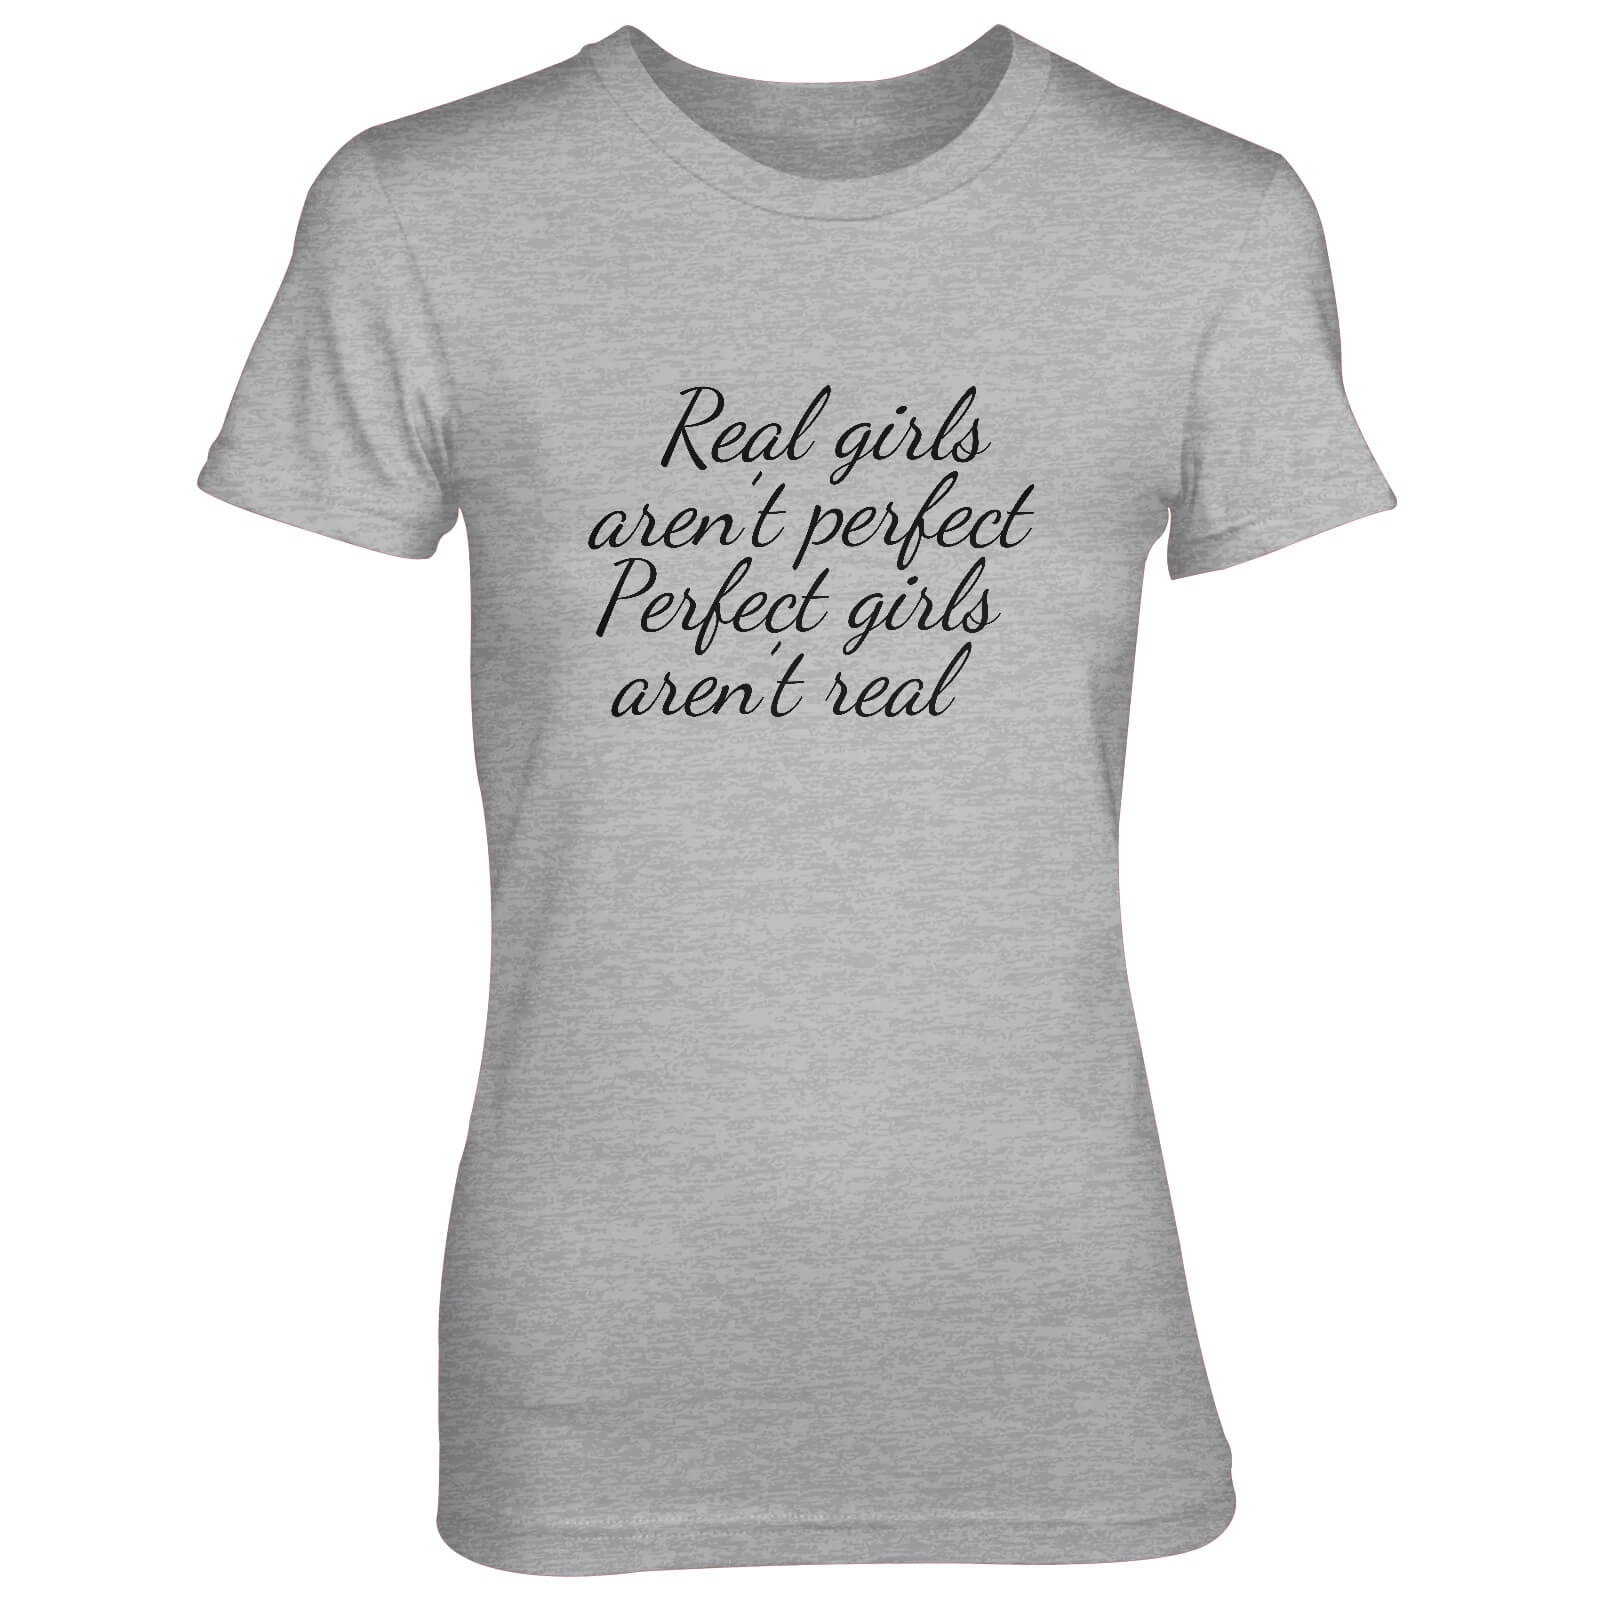 Real Girls Aren't Perfect Women's Grey T-Shirt - S - Grey